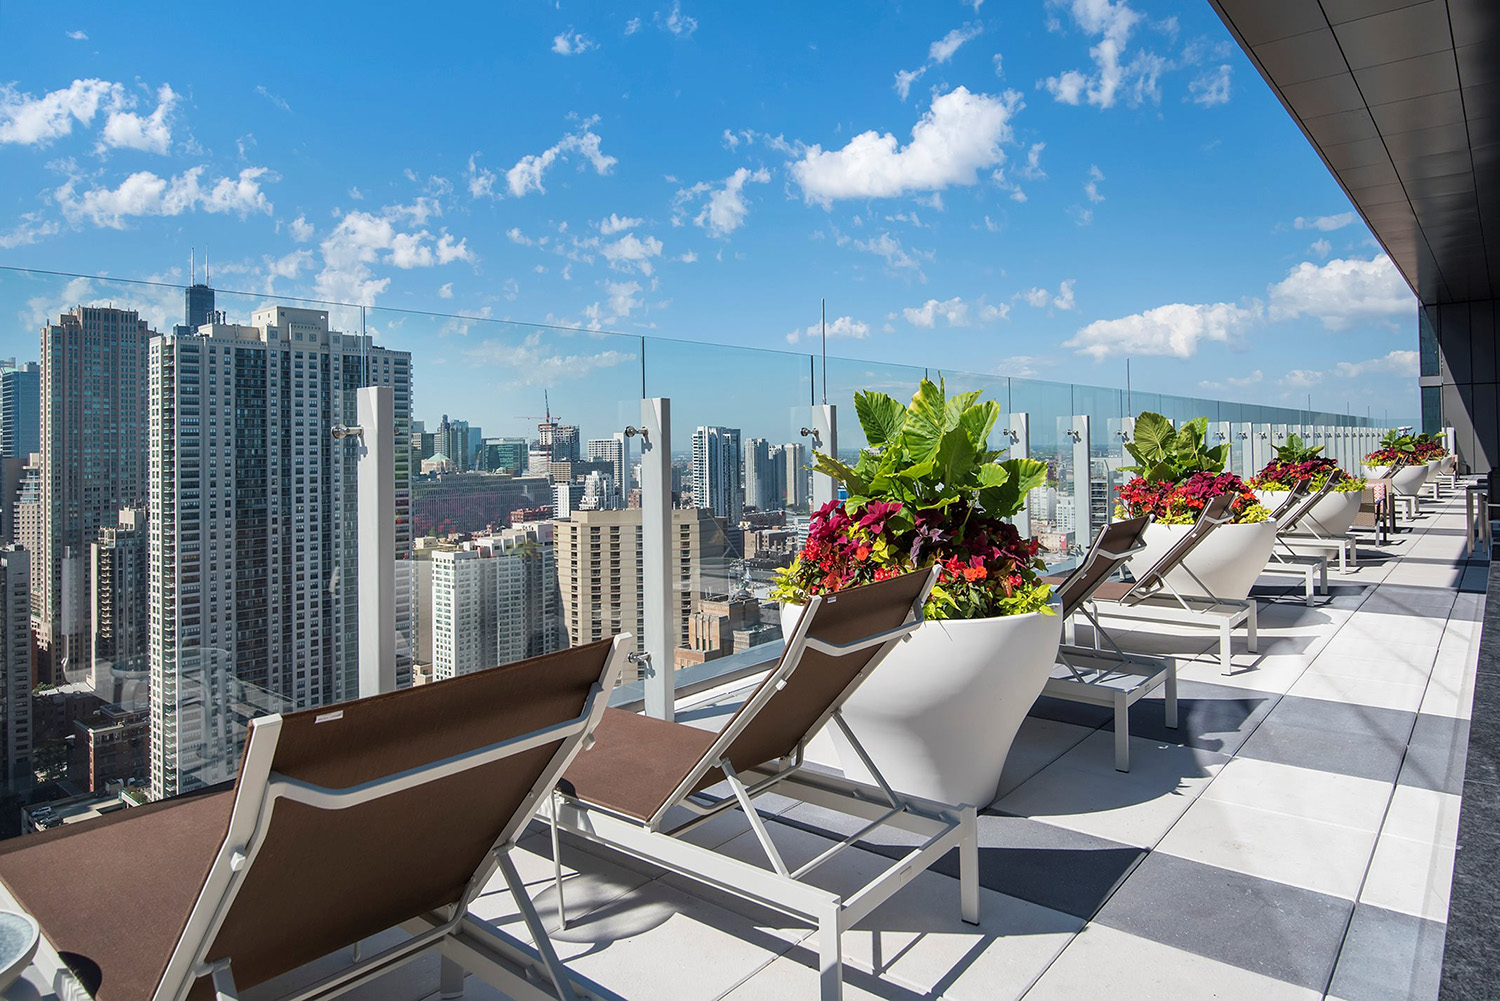 Luxury Apartment rooftop in the loop